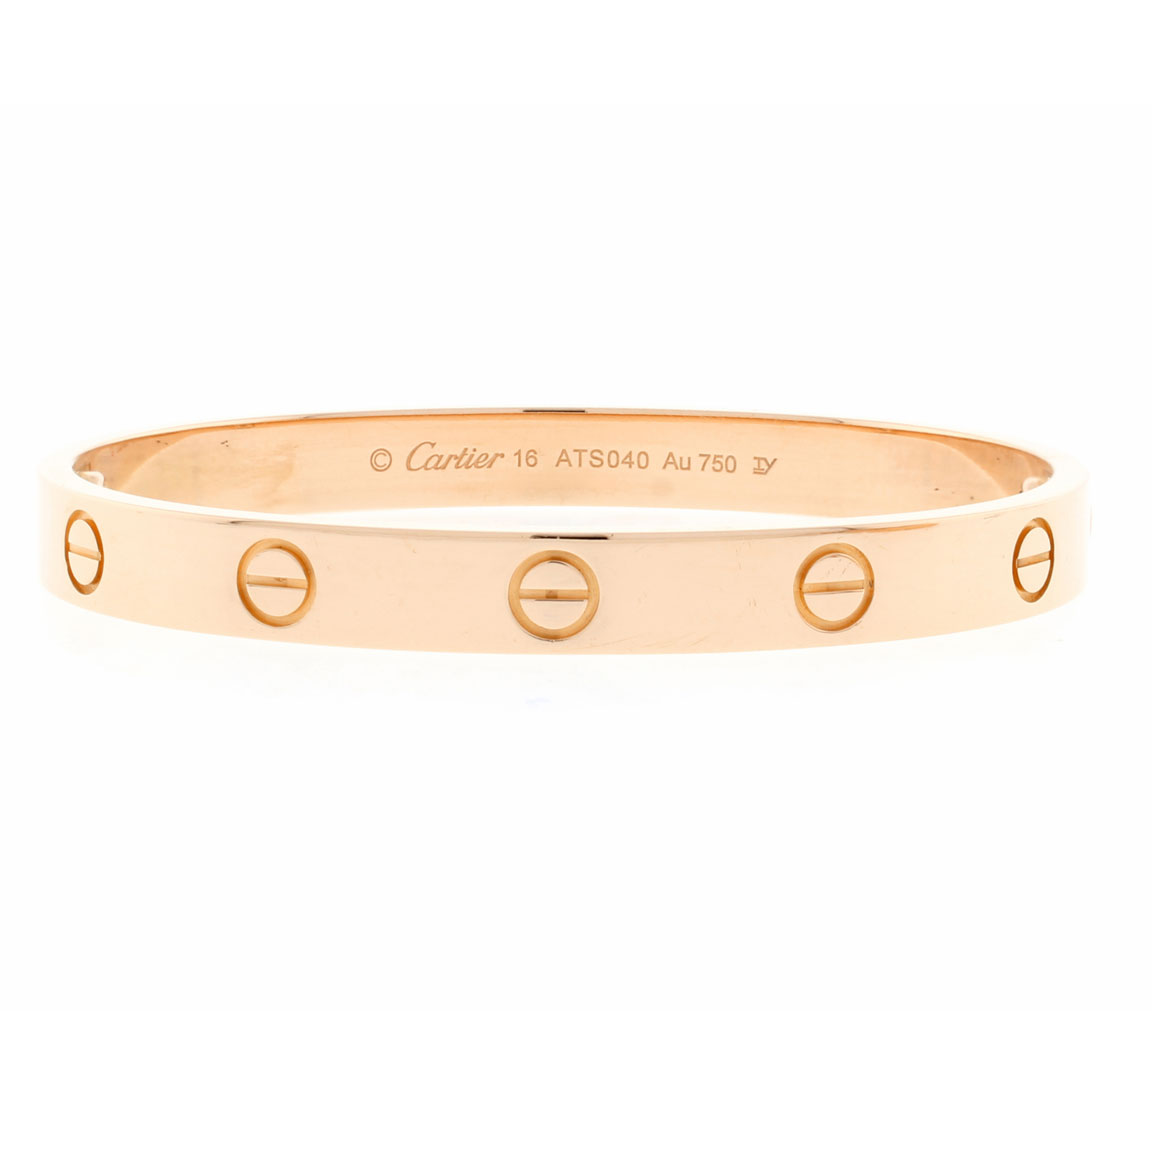 Cartier Love Rose Gold Bracelet, Pampillonia Jewelers